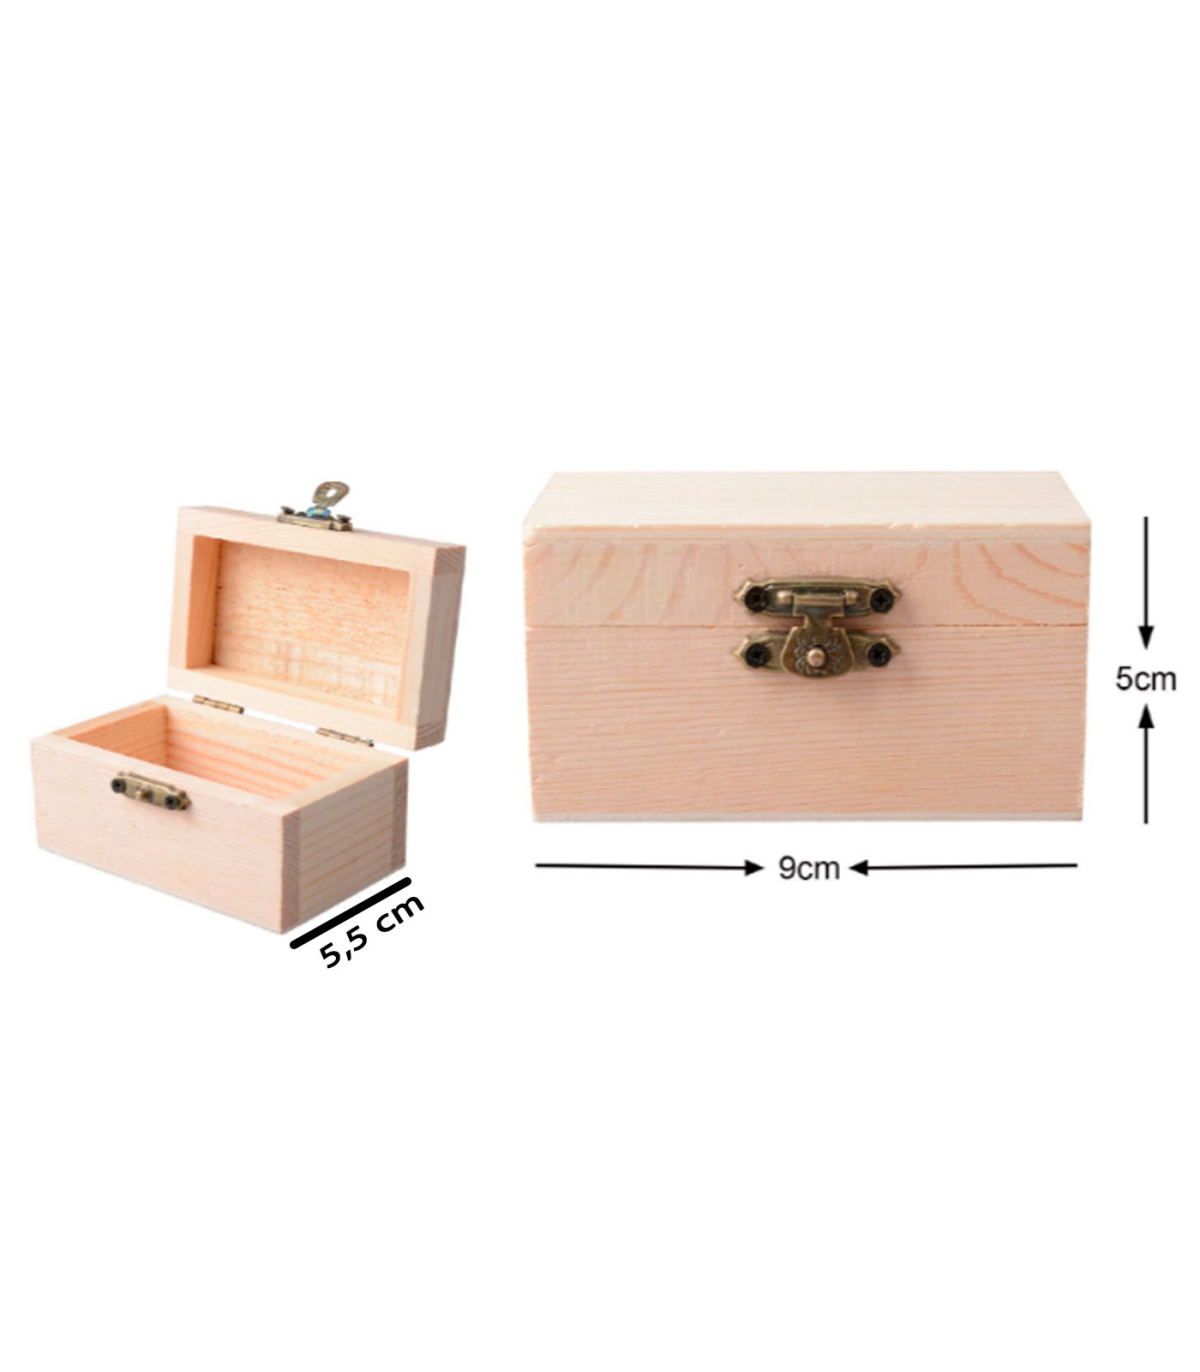 Tradineur - Caja con forma de baúl, madera natural, cierre metálico, tapa  redondeada, almacenaje joyas, manualidades, decoración